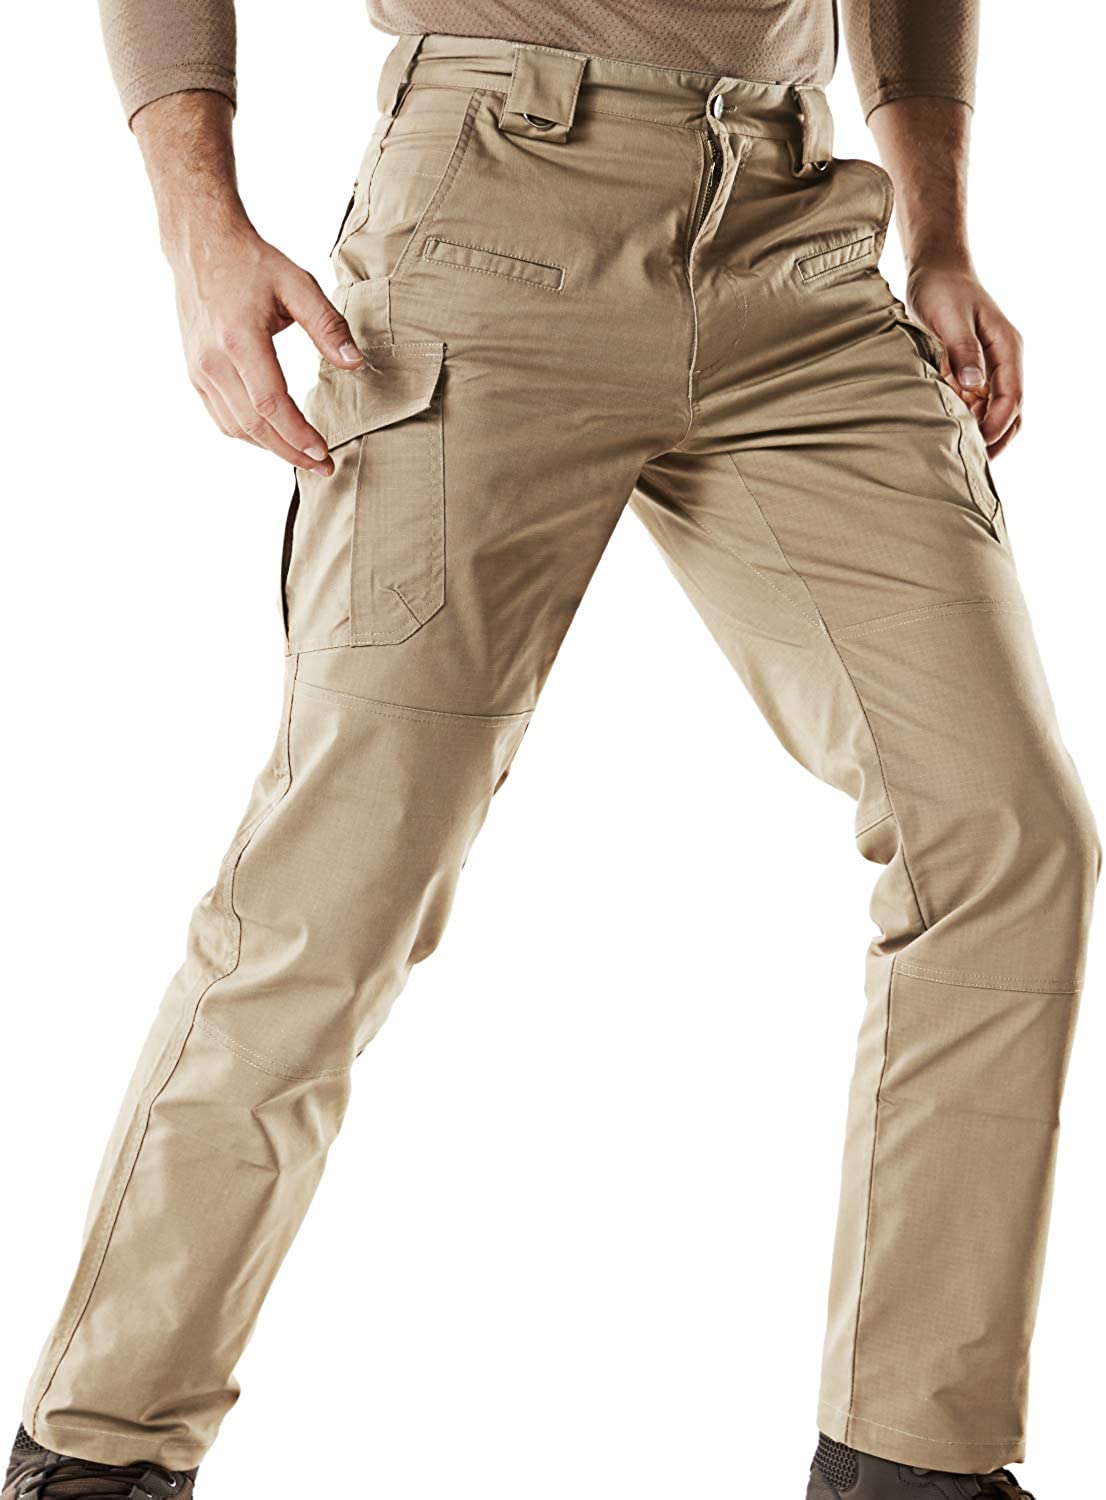 CQR Men's Flex Stretch Tactical Pants Lightweight EDC Outdoor Hiking Work Pants Water Resistant Ripstop Cargo Pants 